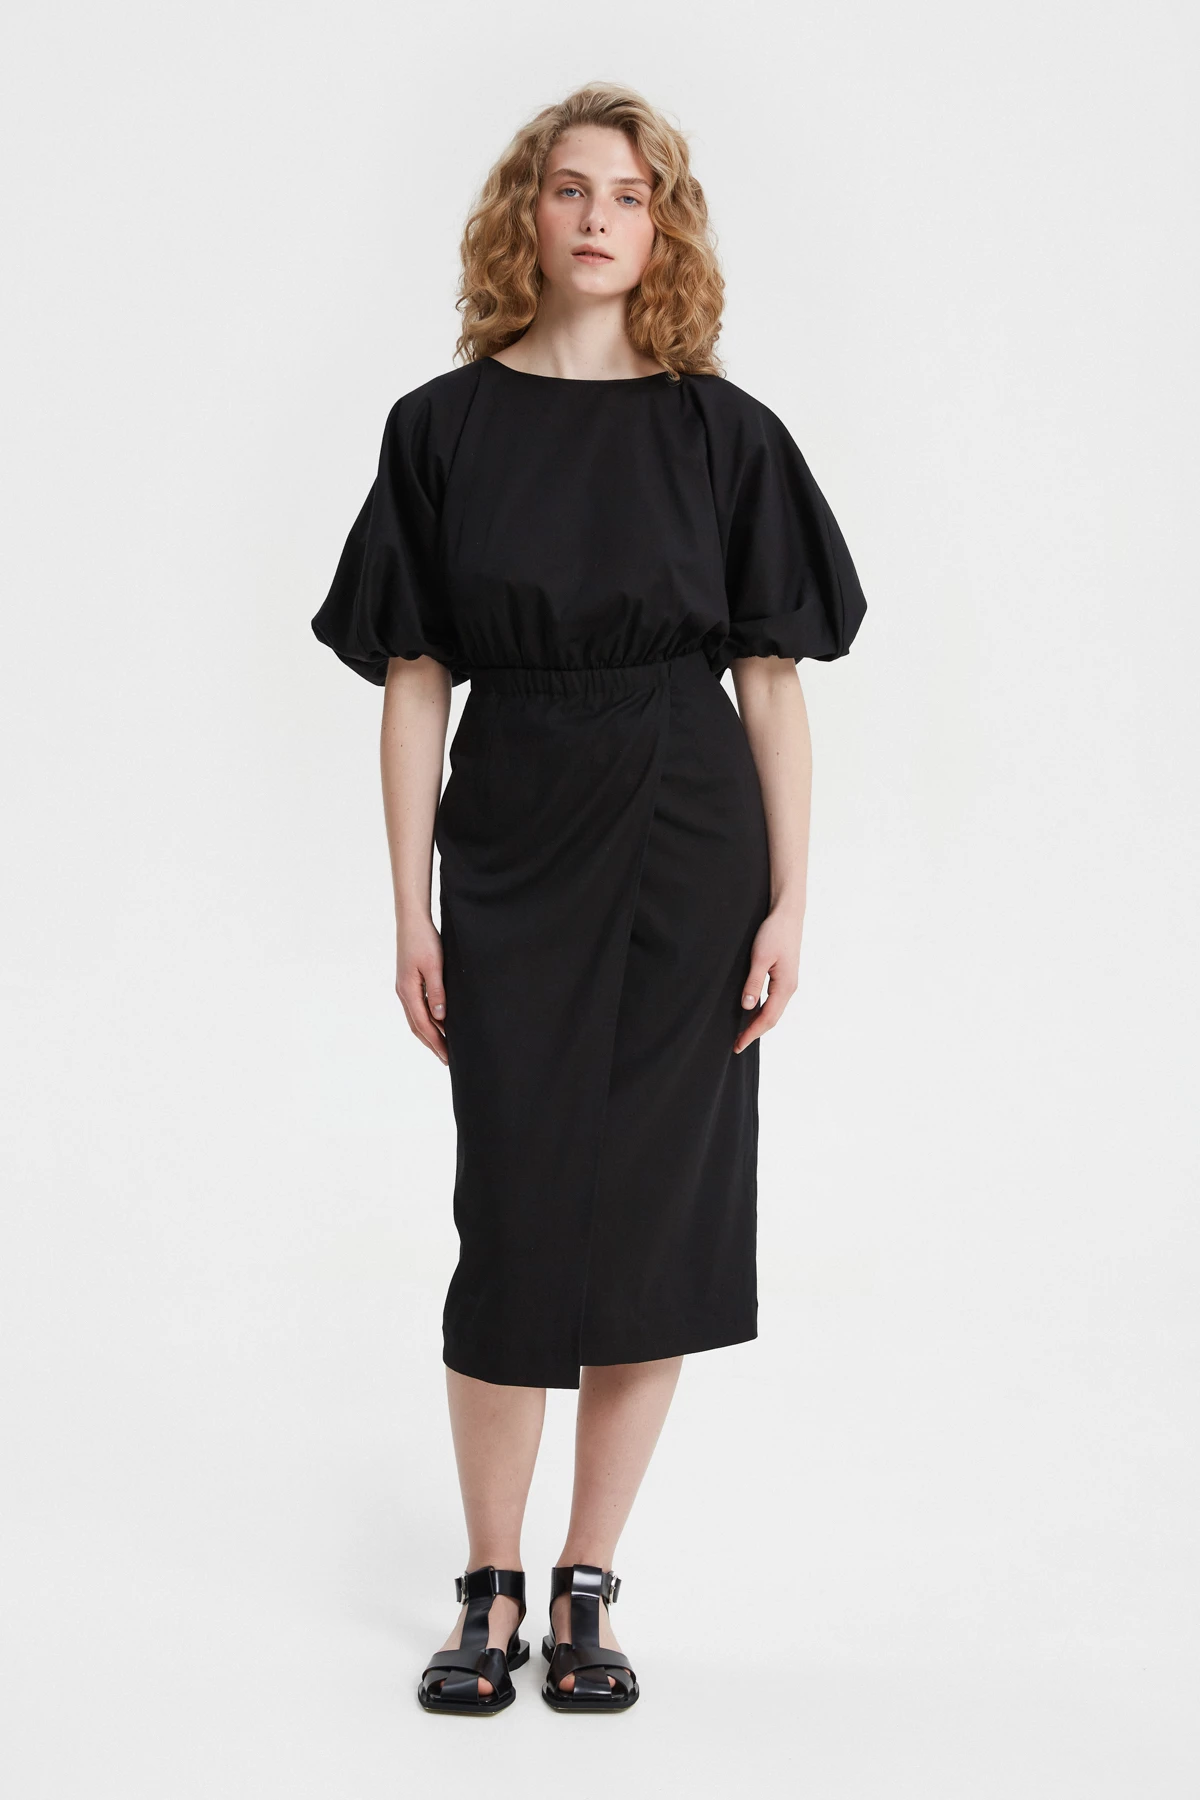 Black midi dress with voluminous top made of shirt fabric , photo 2